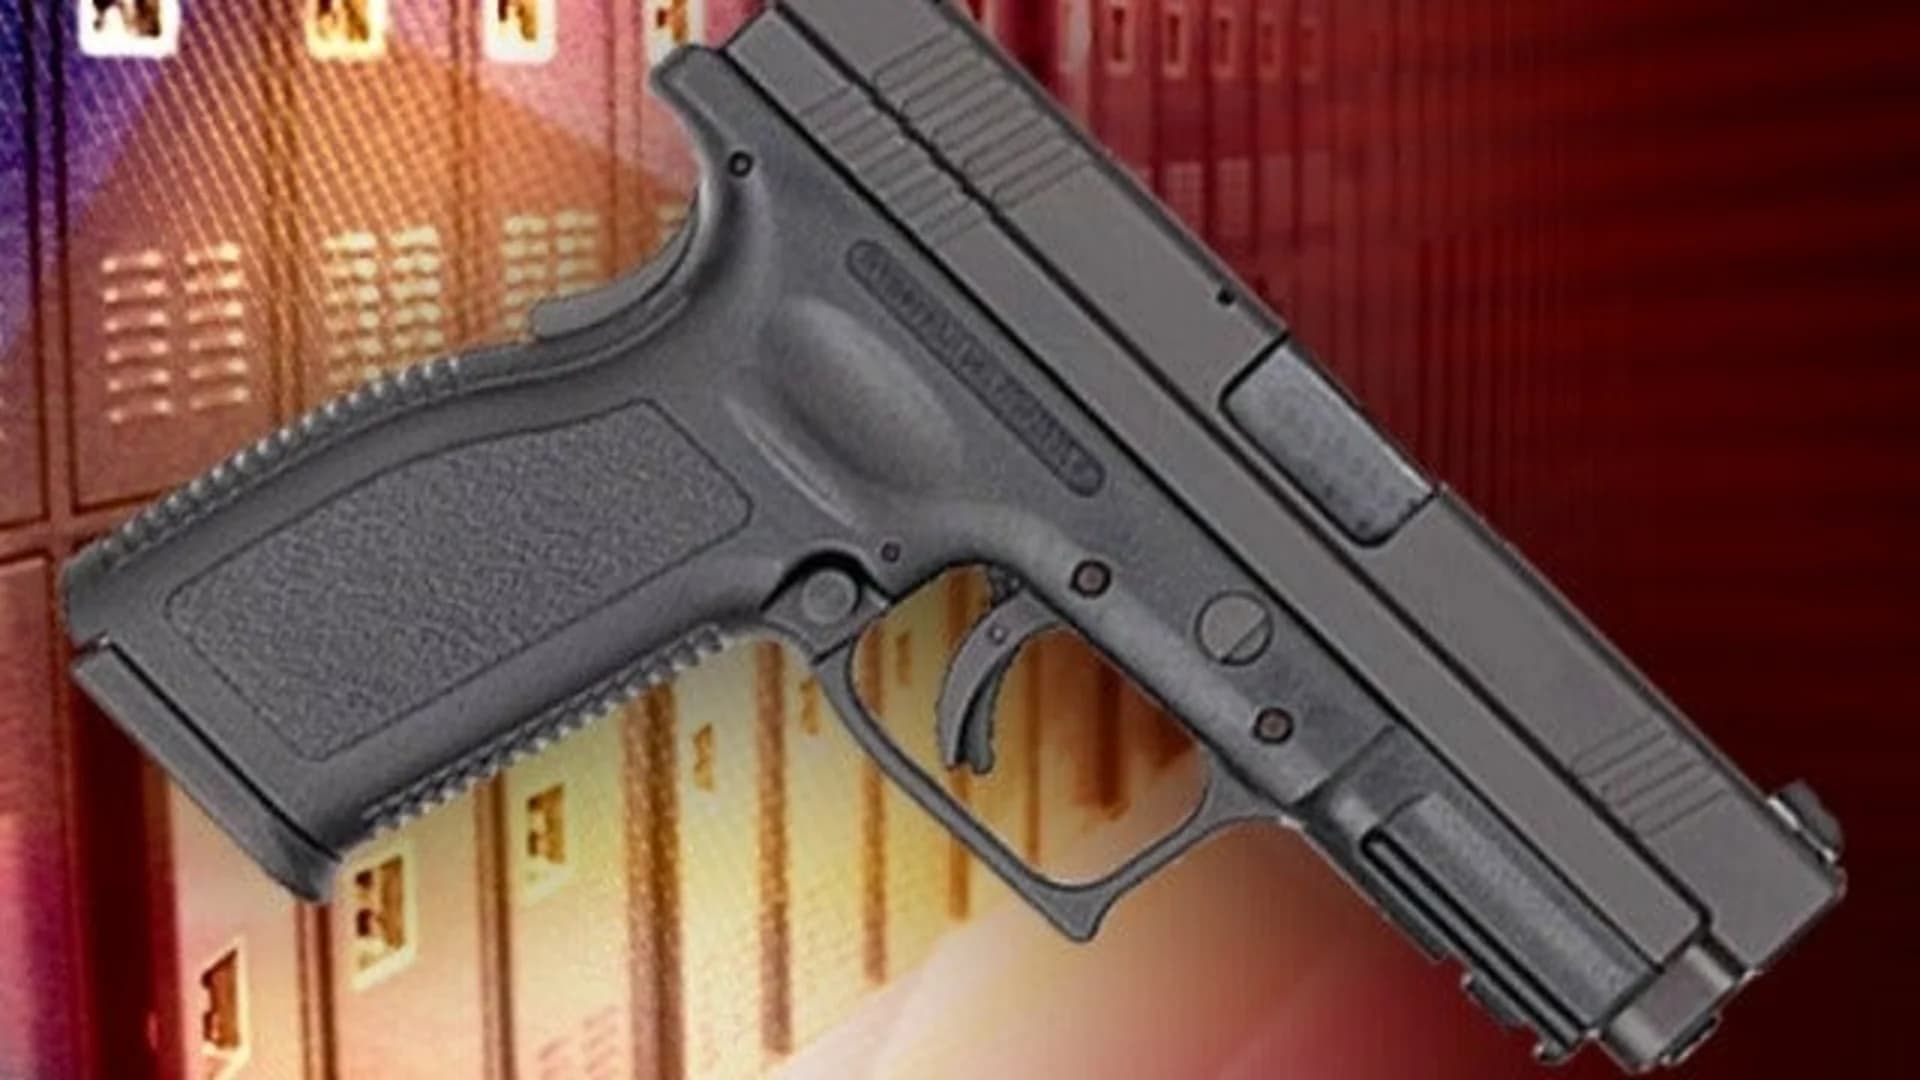 Teen accused of bringing loaded gun to charter school